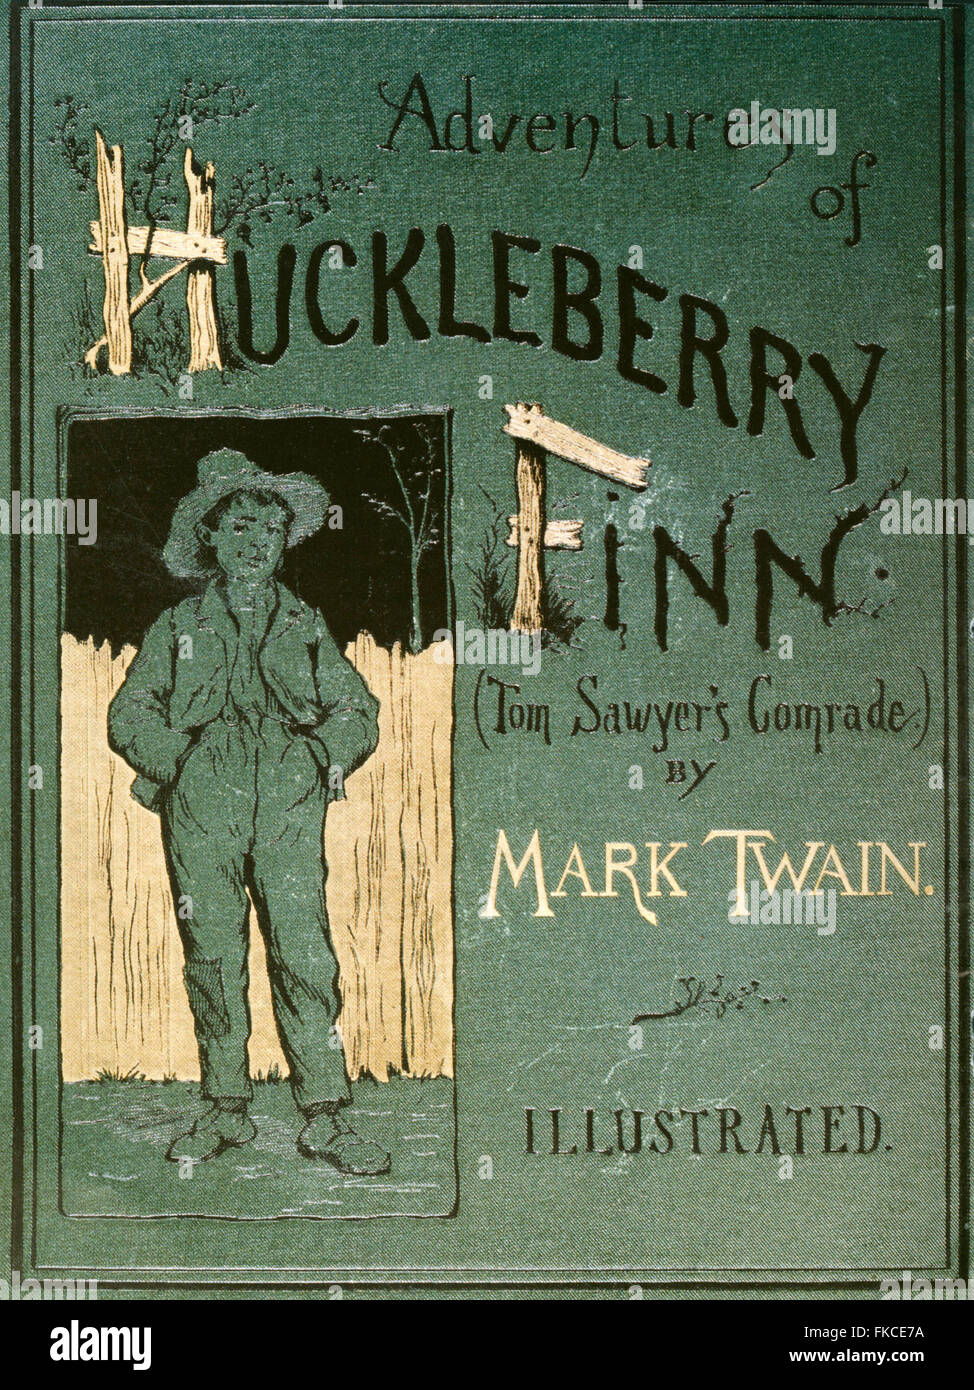 1880s USA Adventures of Huckleberry Finn Book Cover Stock Photo